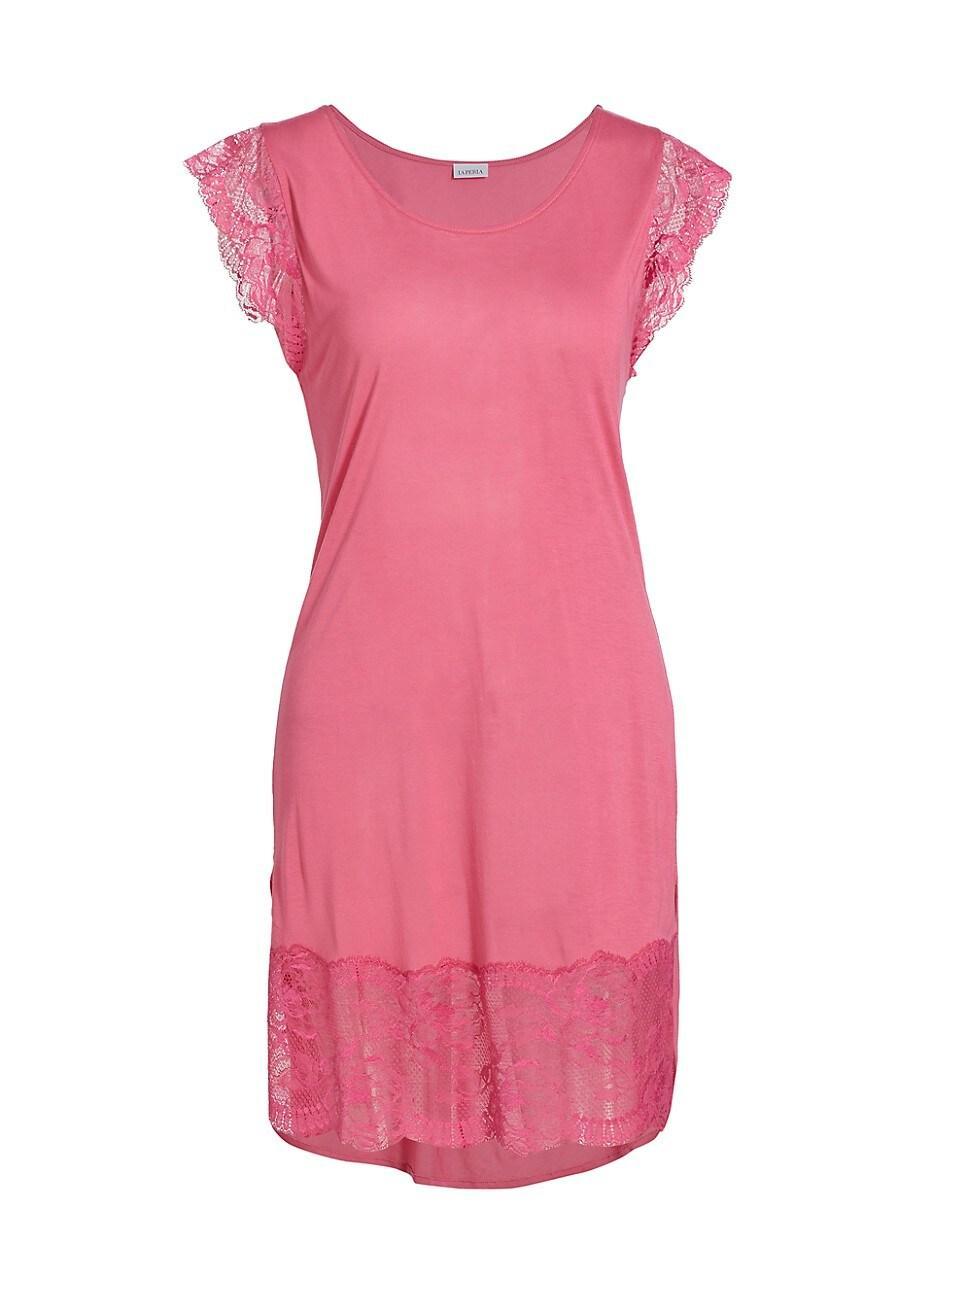 Womens Lace-Trim Jersey Dress Product Image